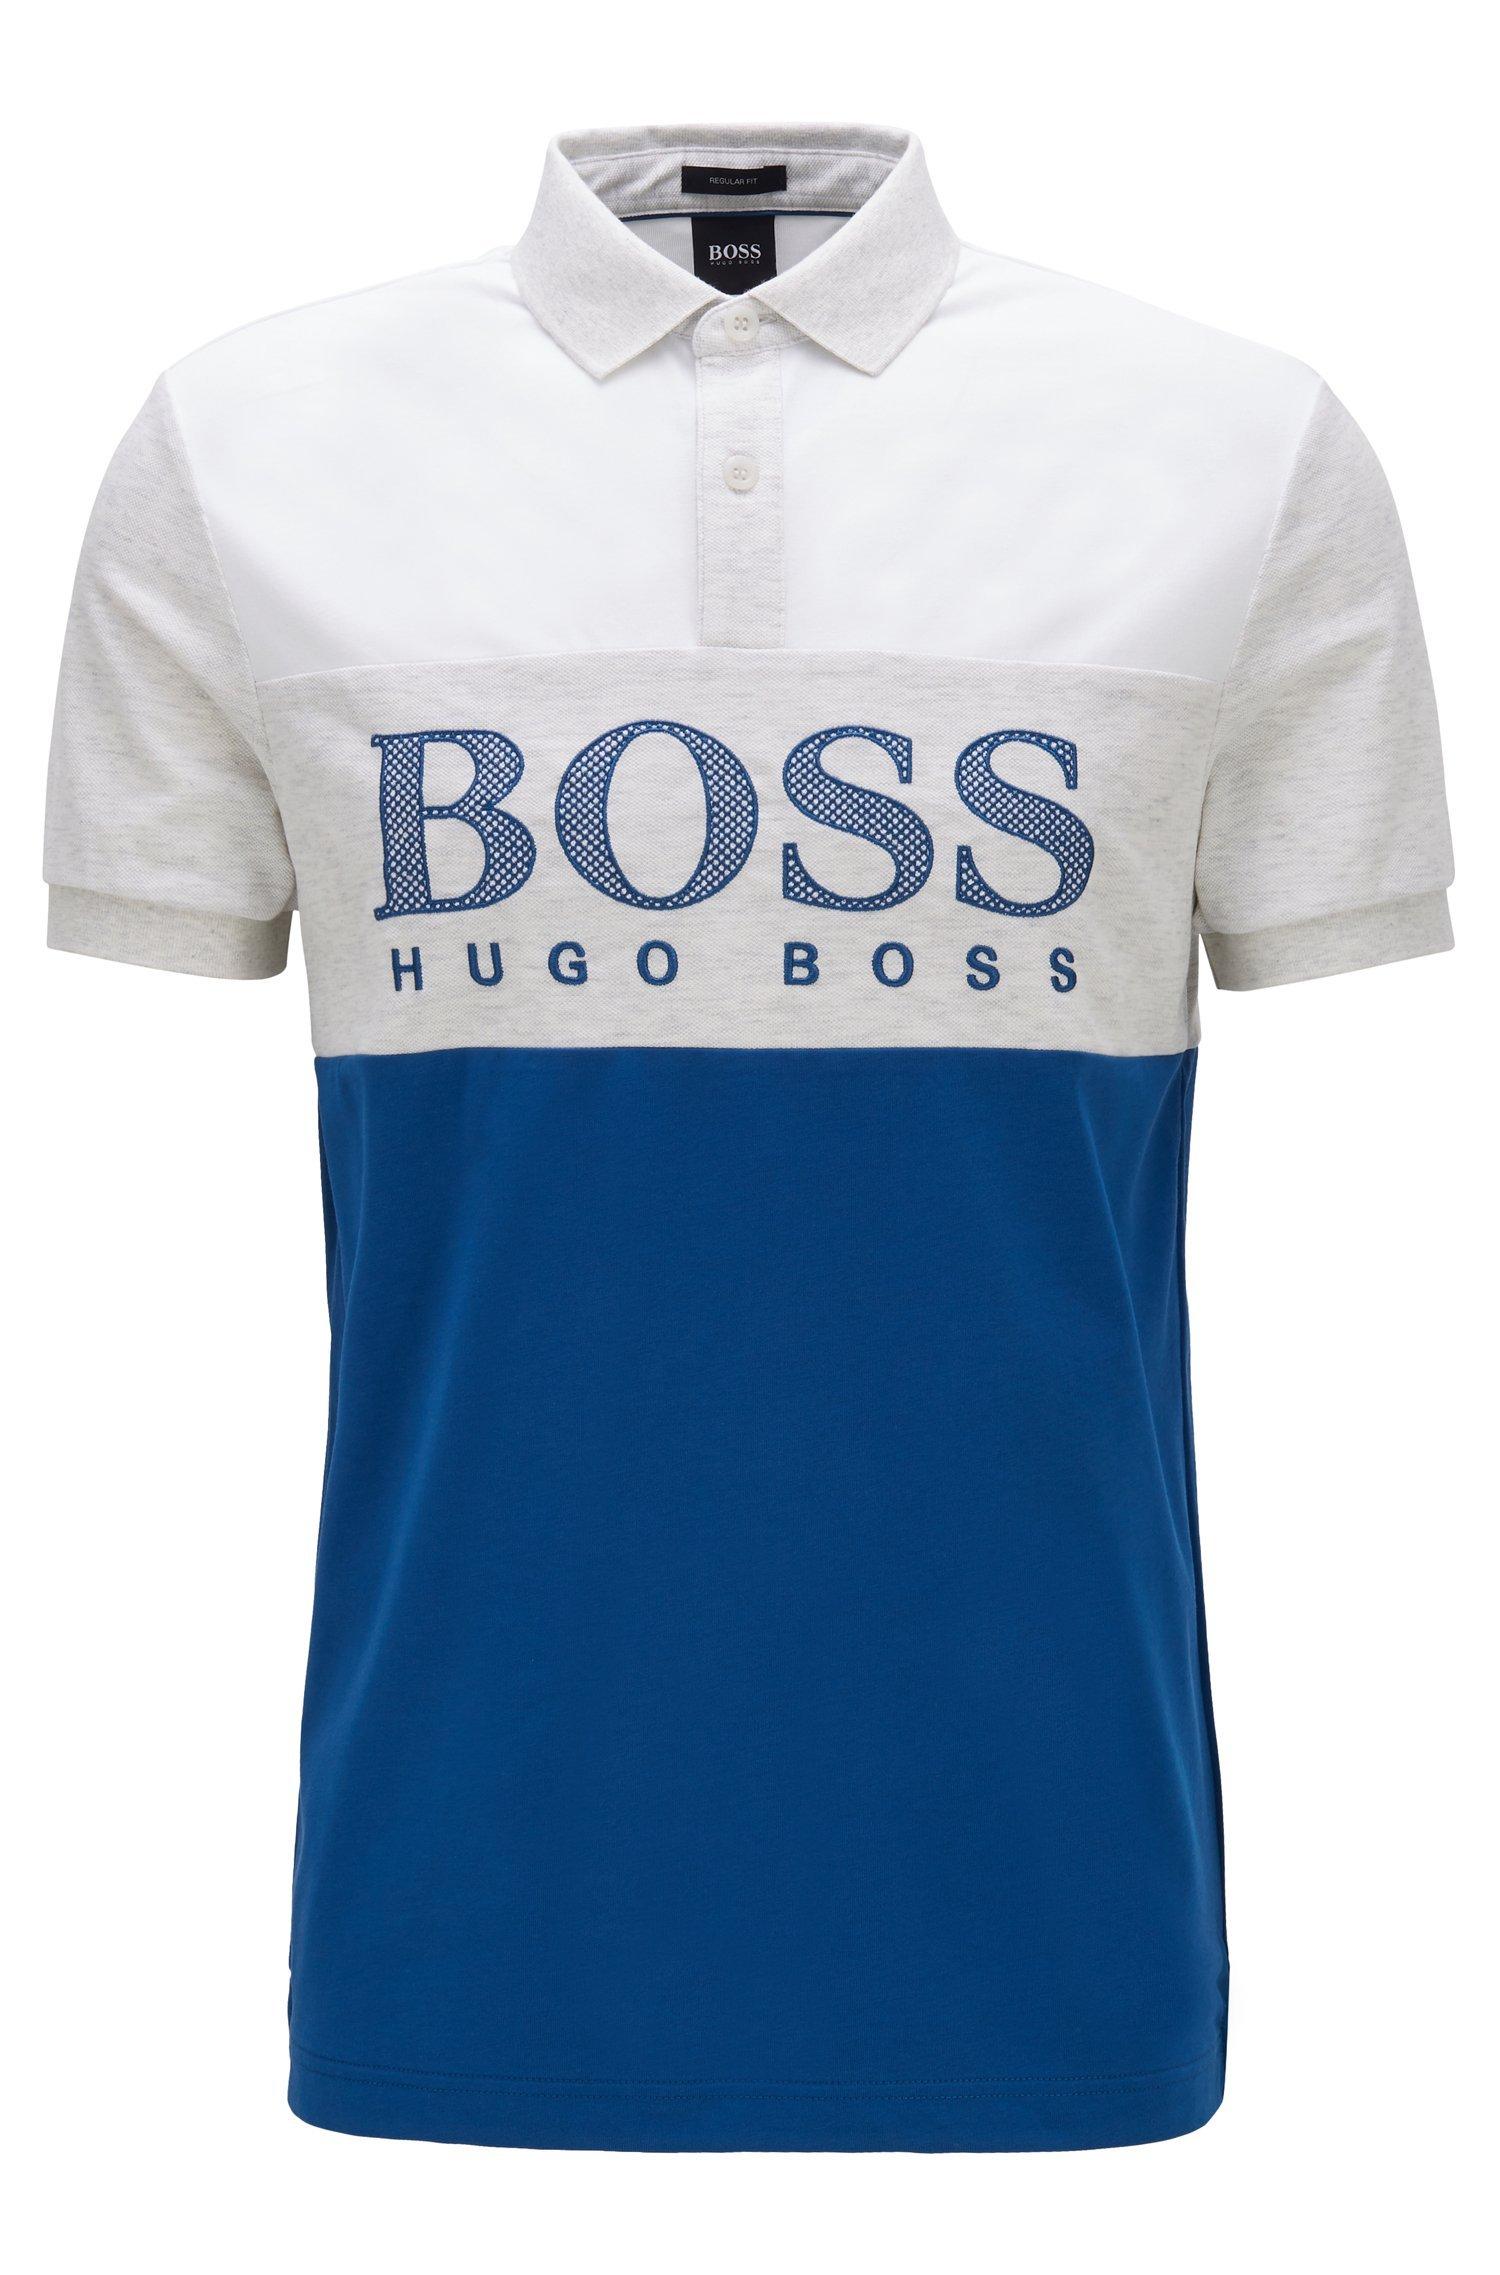 mens boss clothing